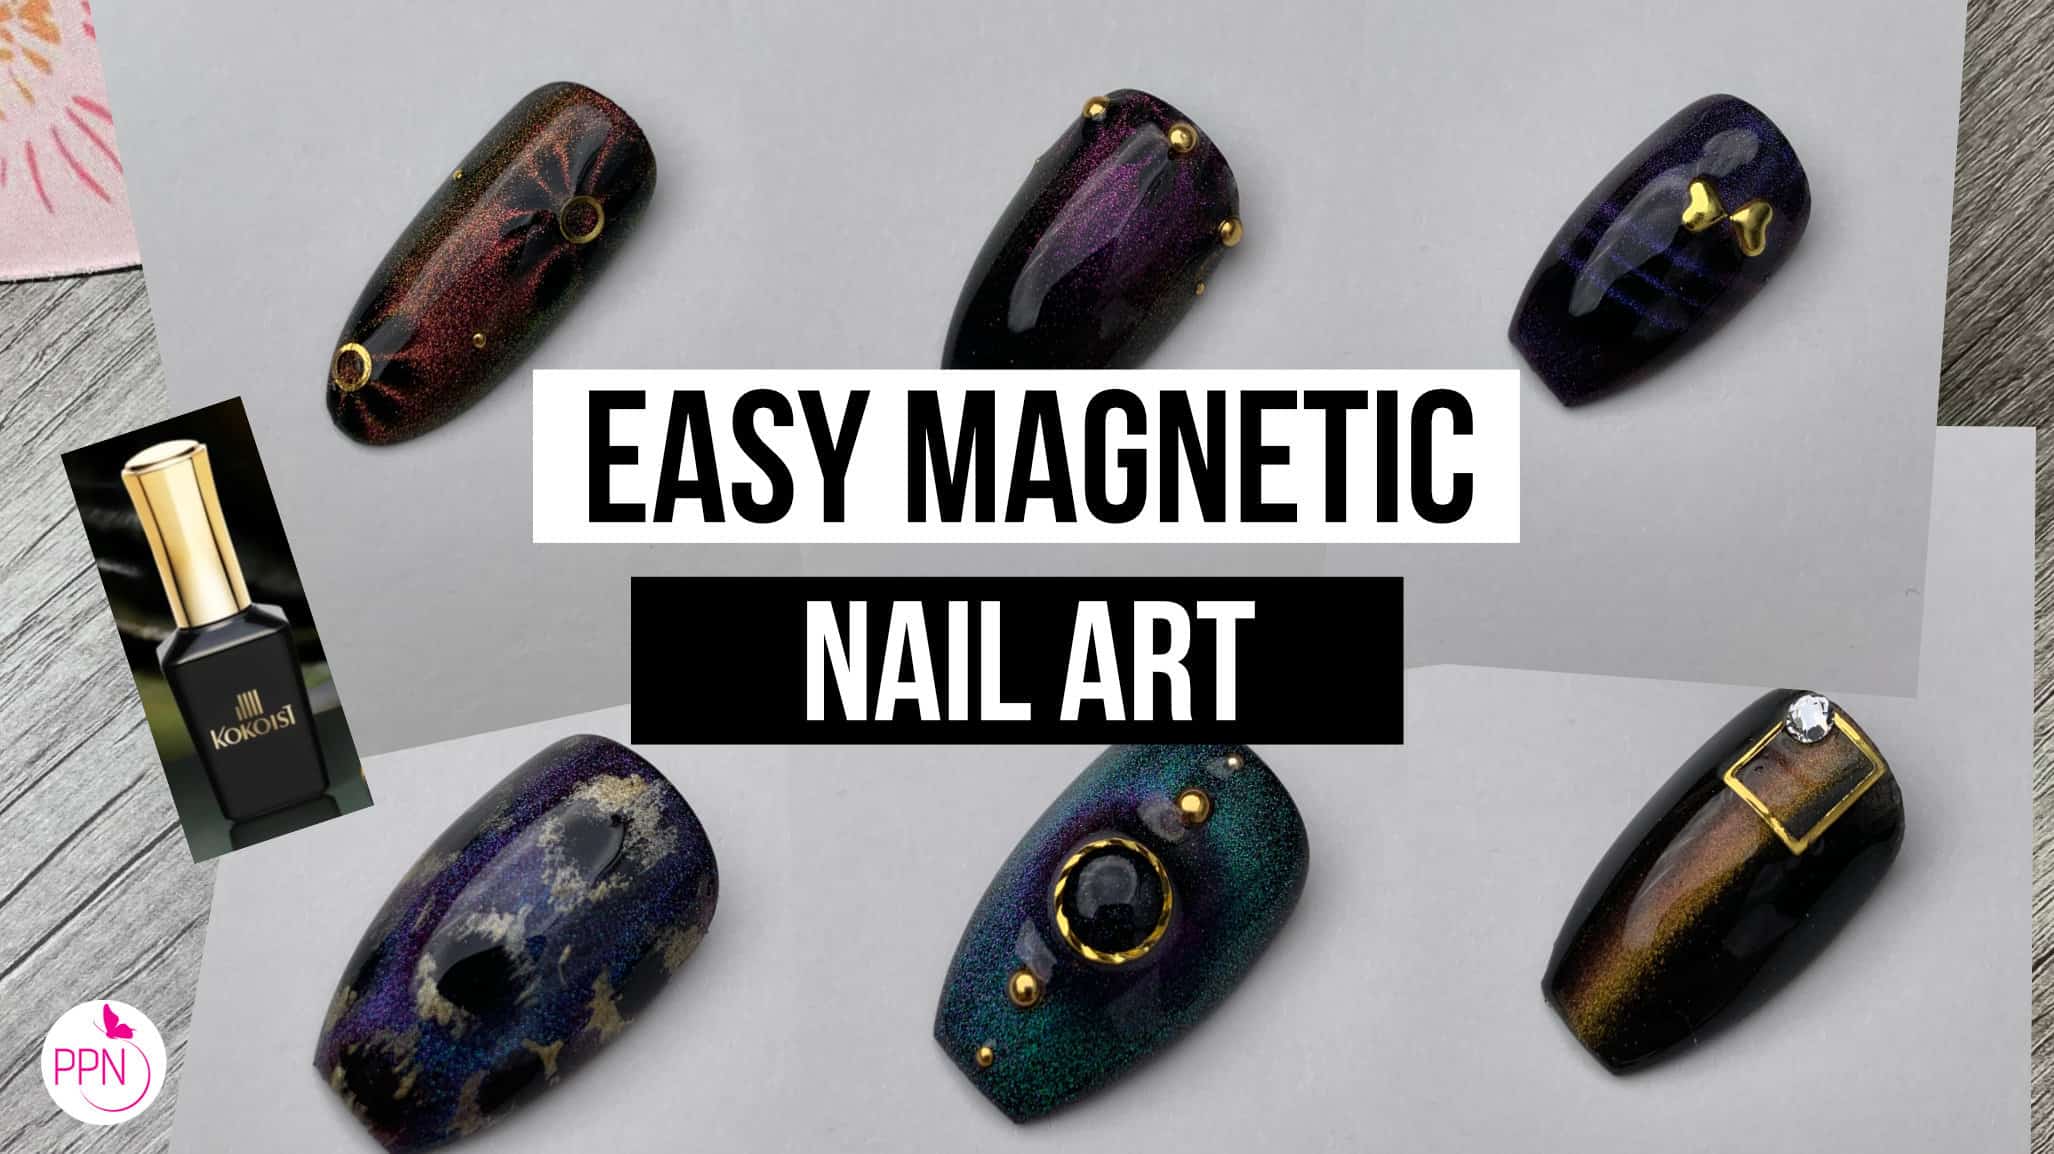 6. Magnetic nail art kit - wide 5